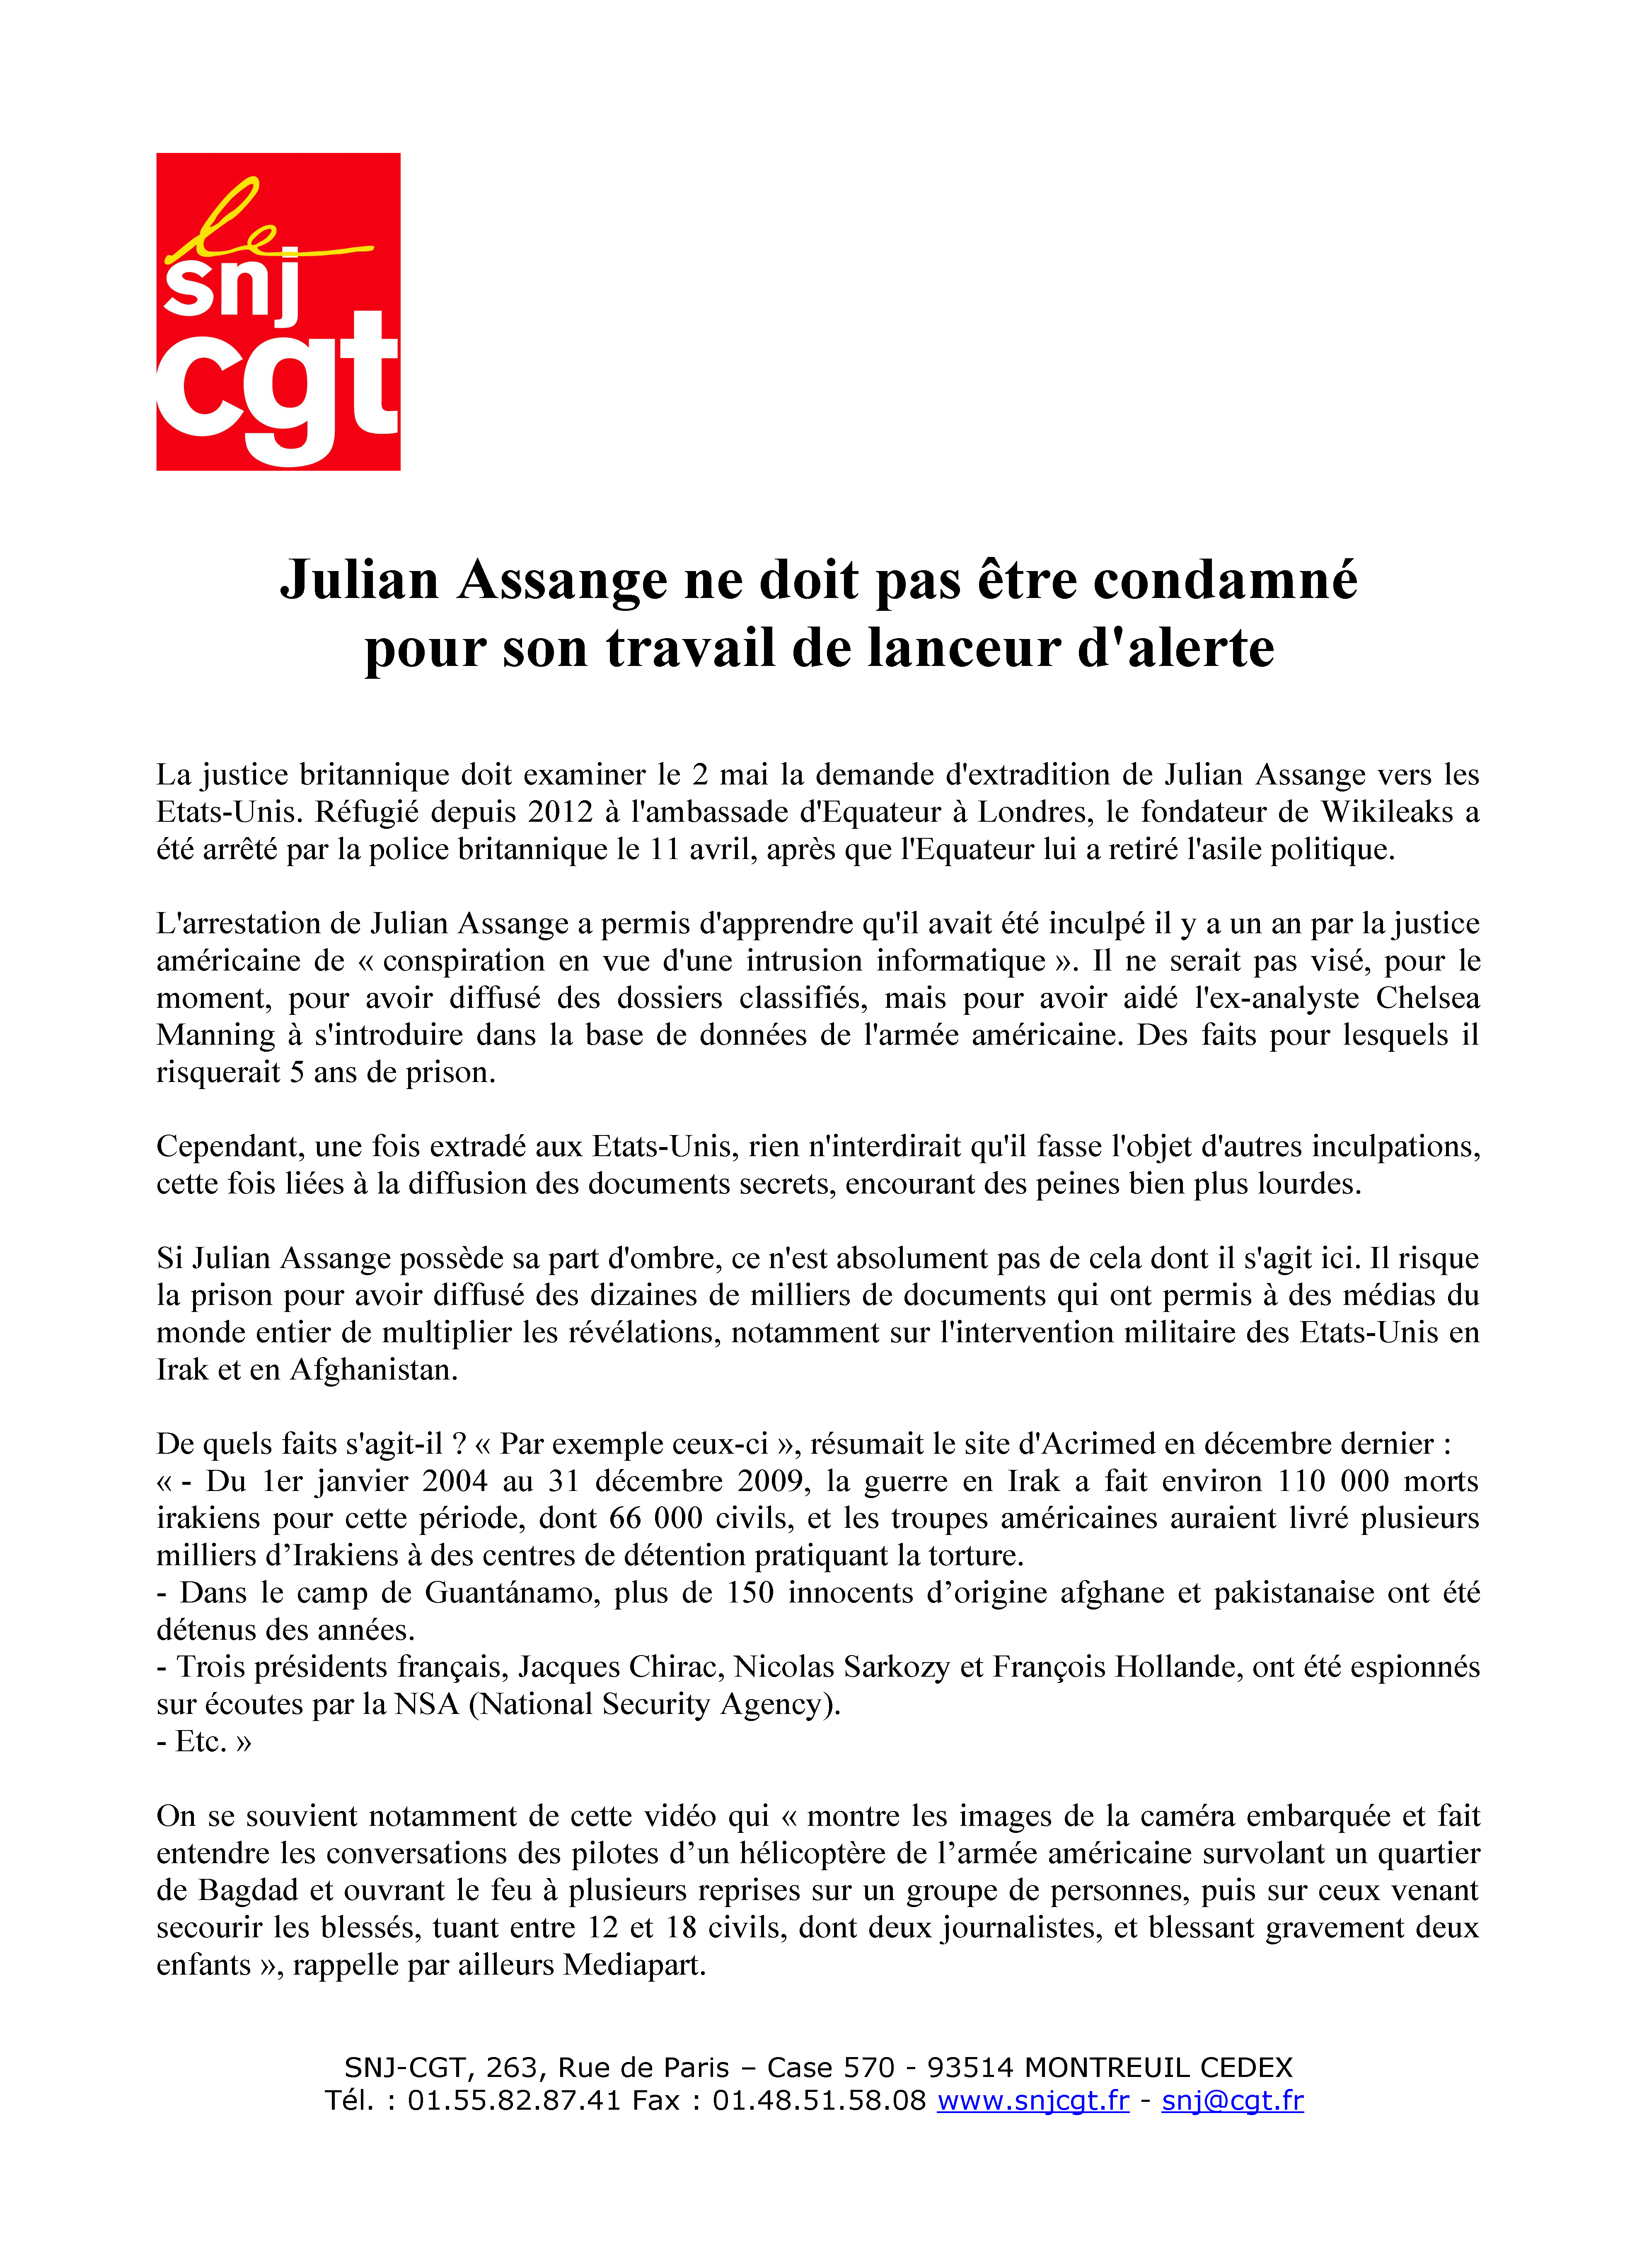 snj-cgt-julian-assange-26-avril-2019_page_1